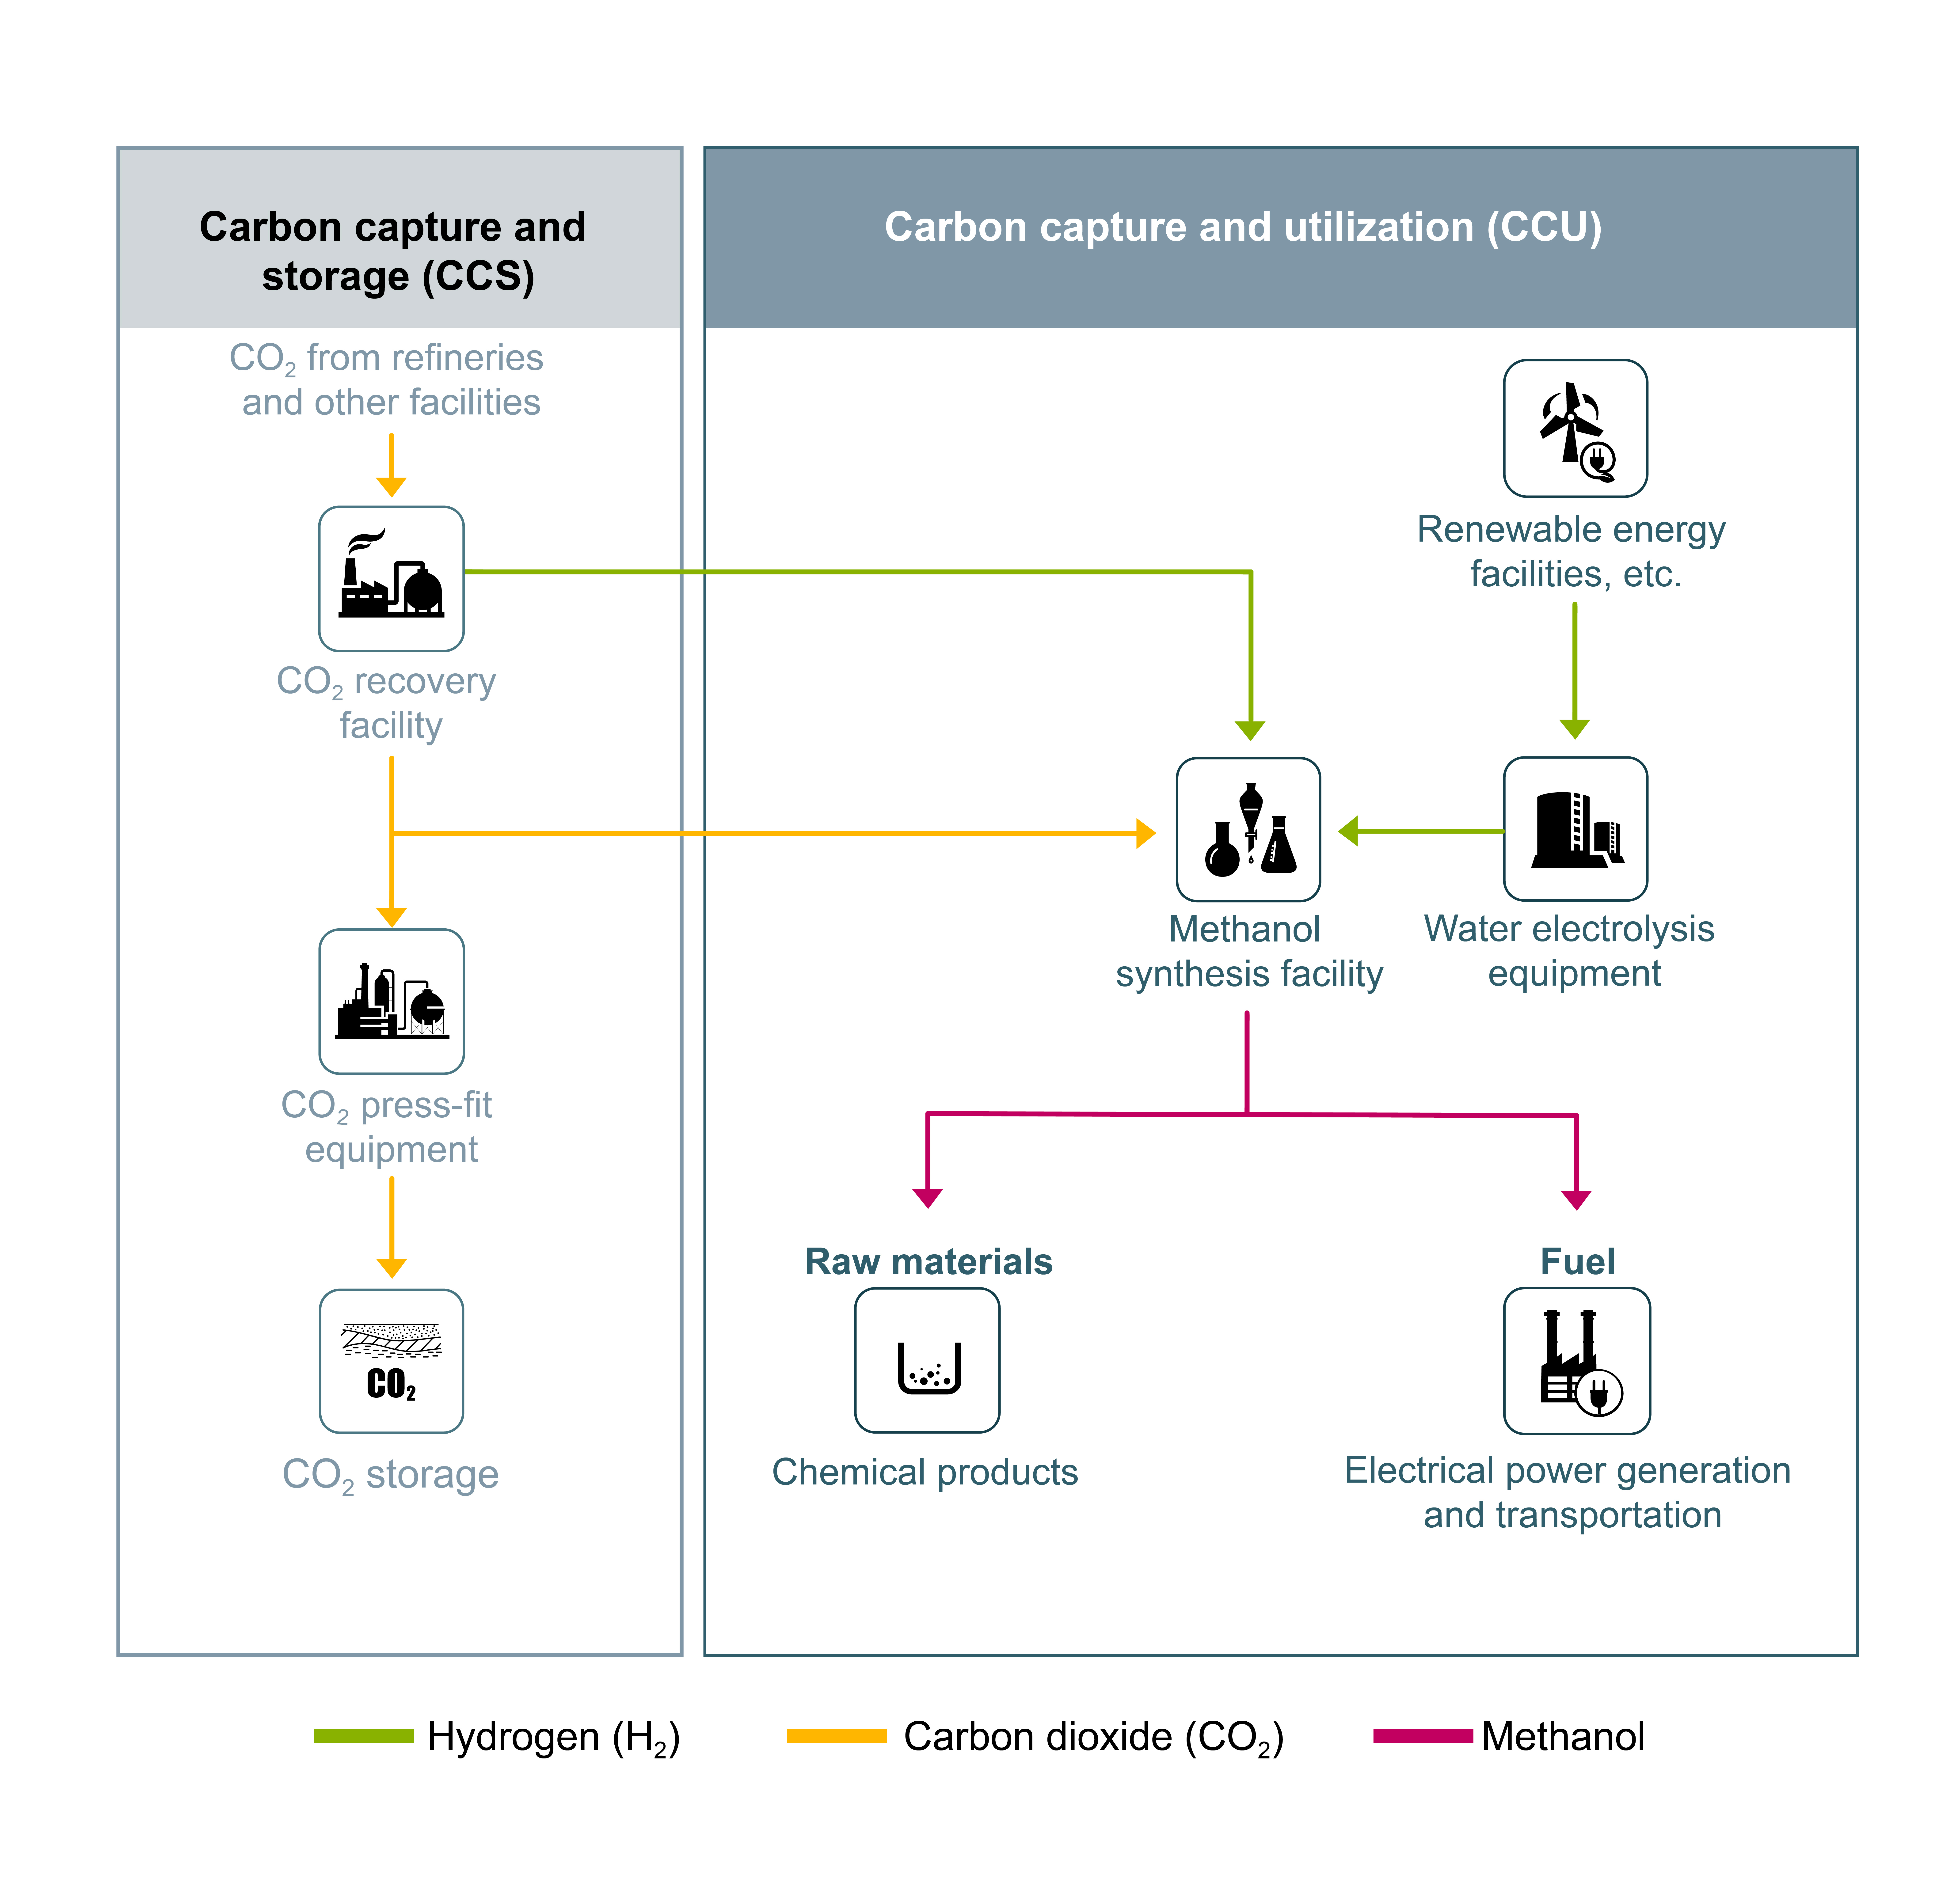 ANNEX A: The process of CCS and CCU 